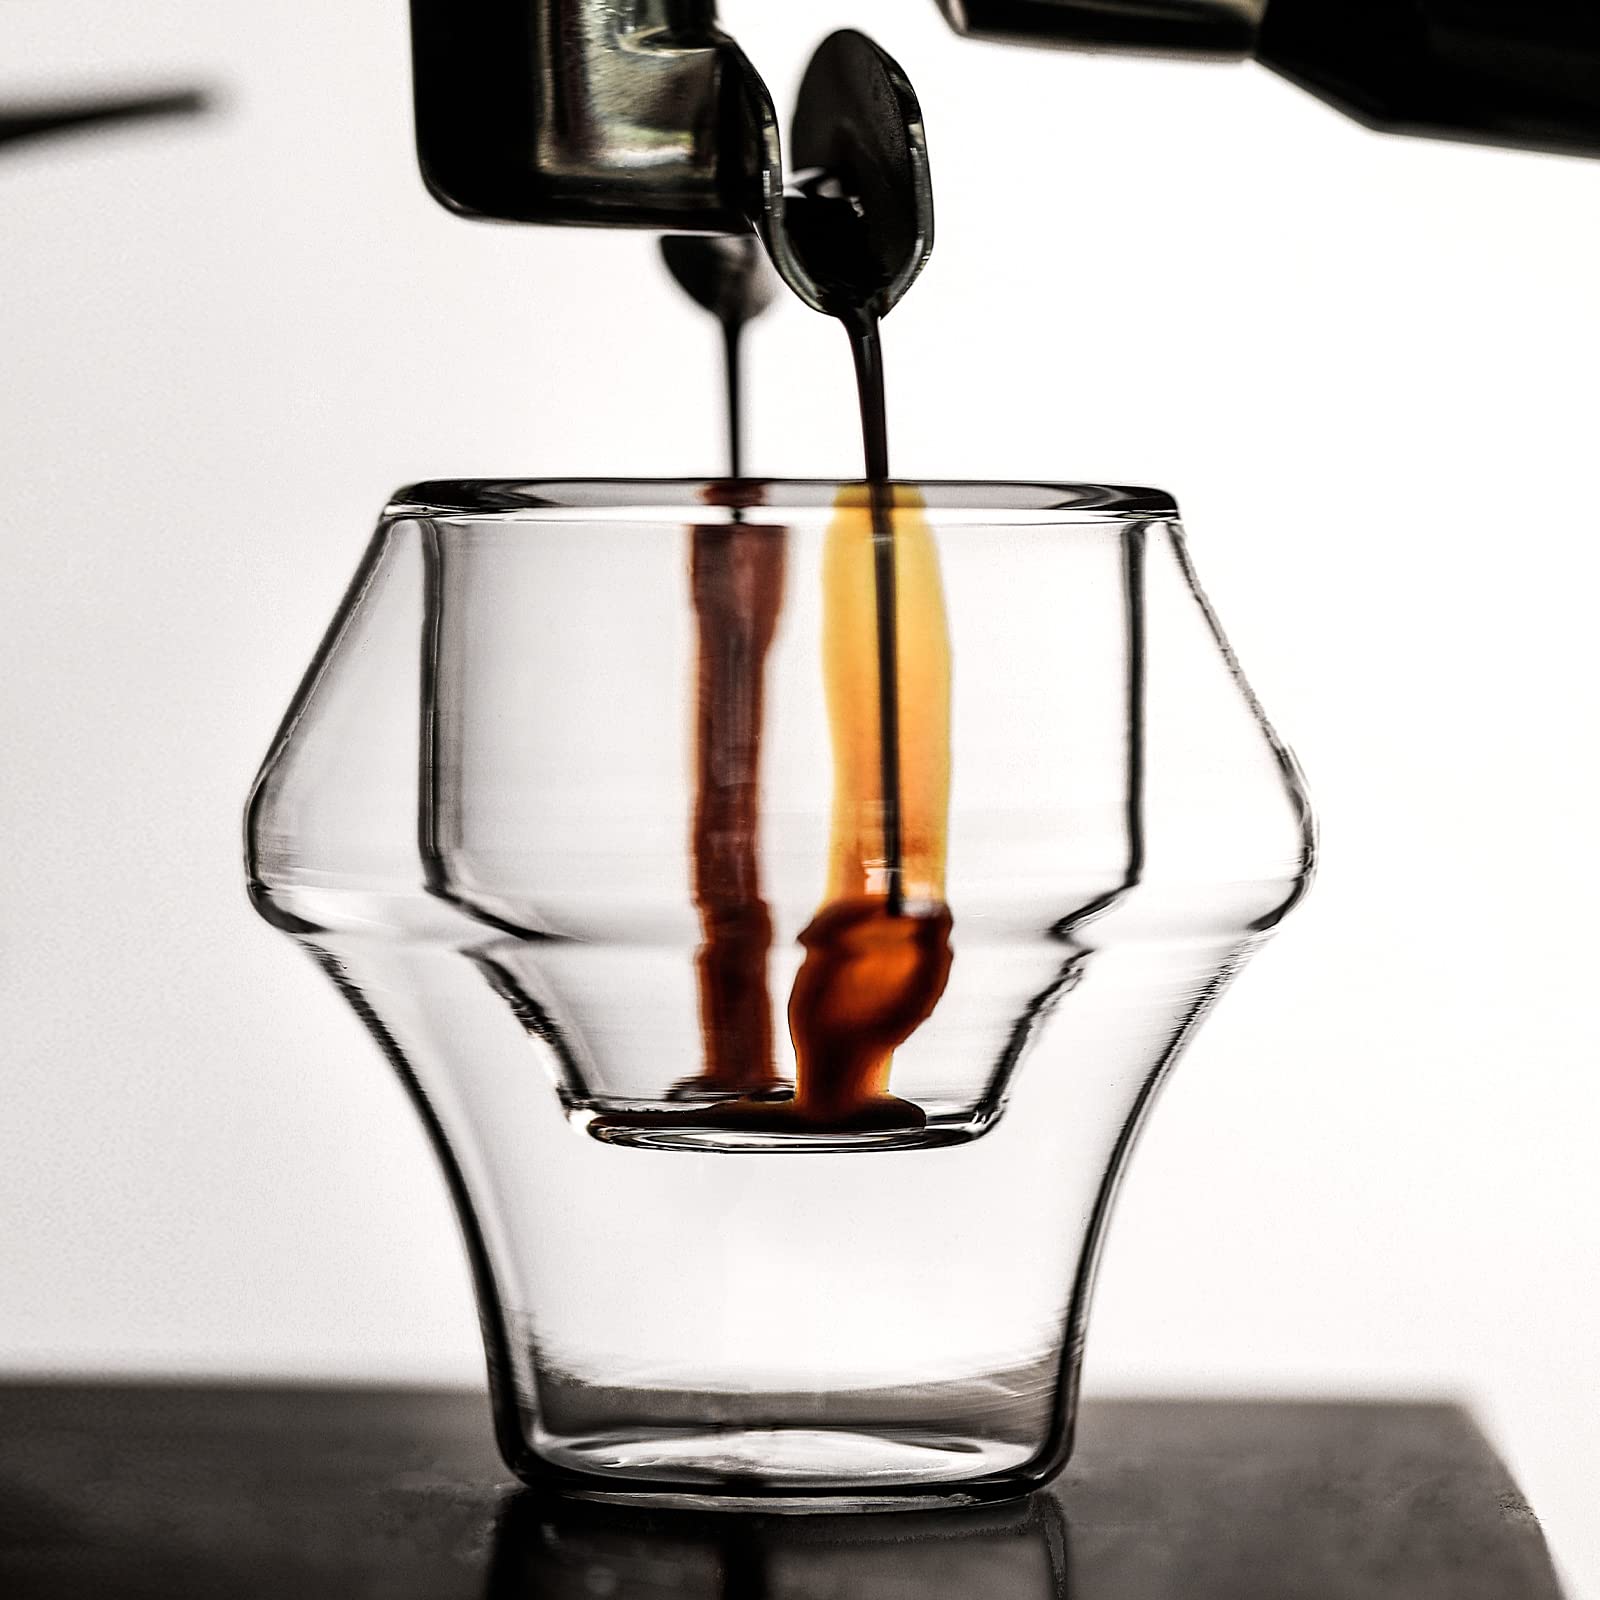 MHW-3BOMBER Espresso Cups Double Wall Glass Coffee Mugs Set of 2 Shot Glass Insulated Coffee Tea Mug Home Barista Coffee Accessories G5058